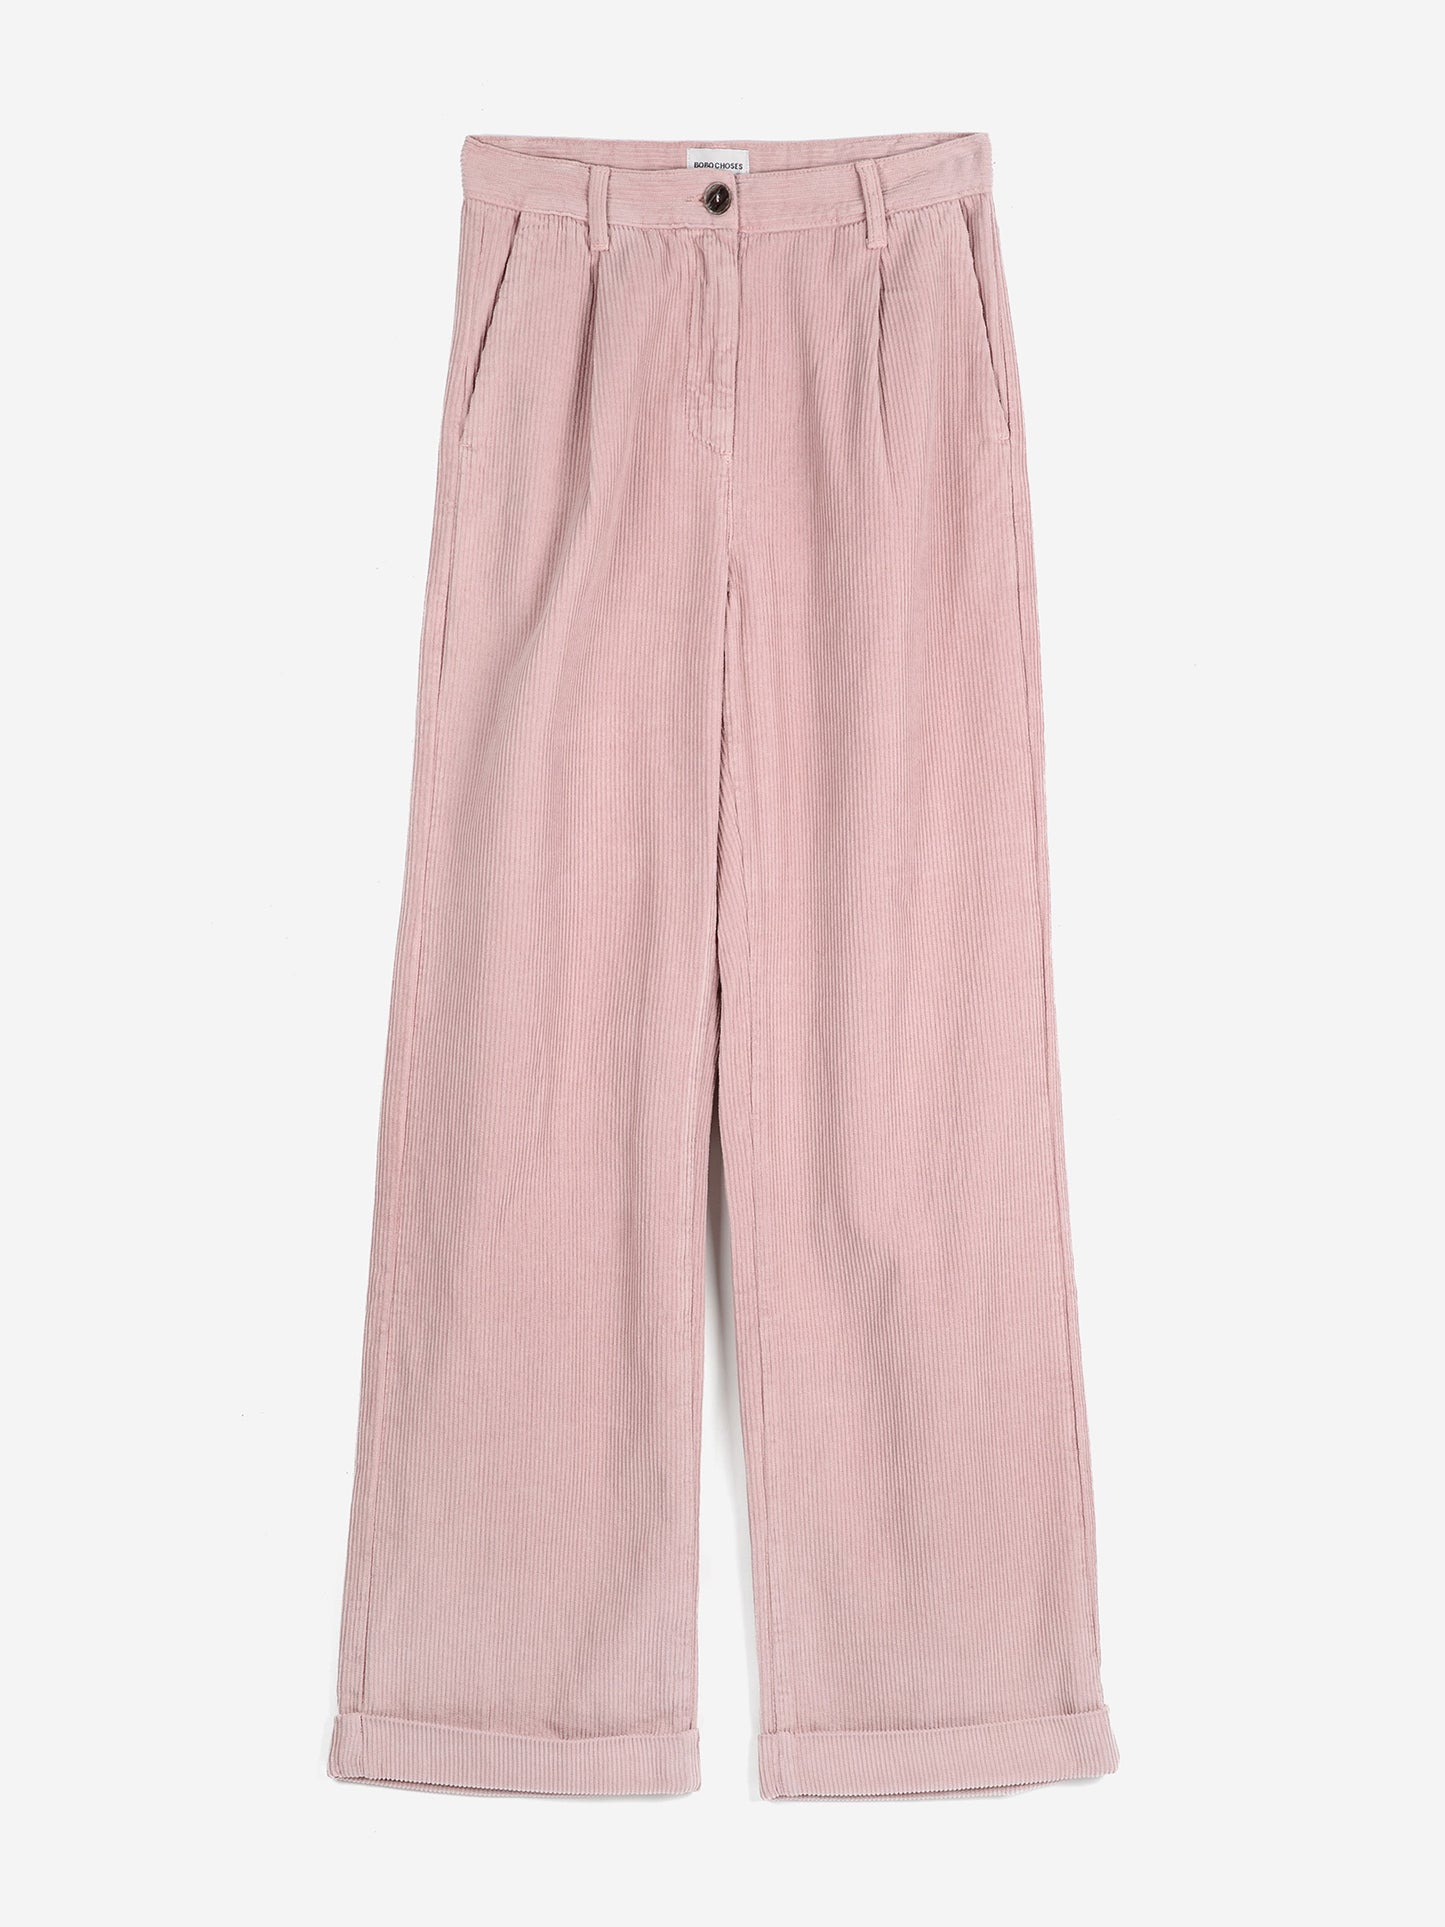 Pink corduroy pants